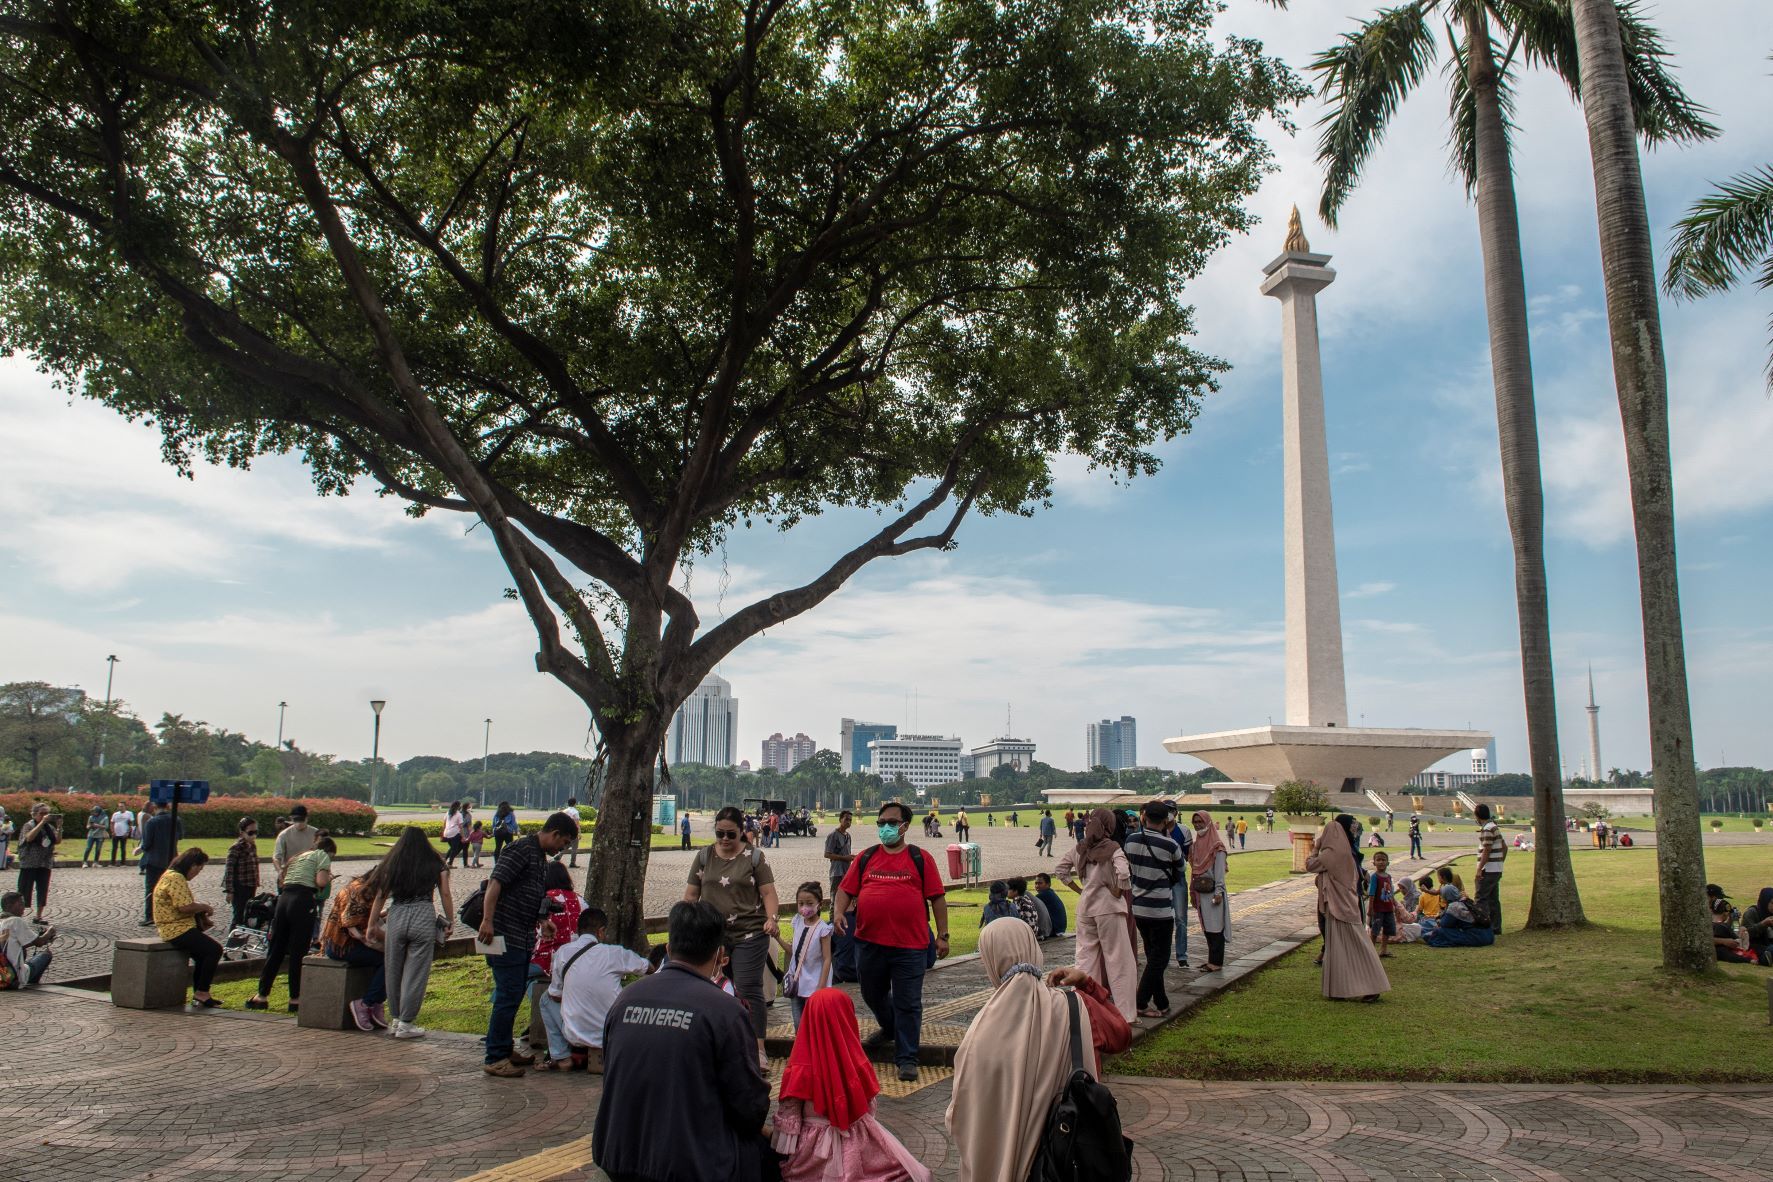 14 Tempat Bersejarah di Jakarta Pusat, Ada Museum dan Taman